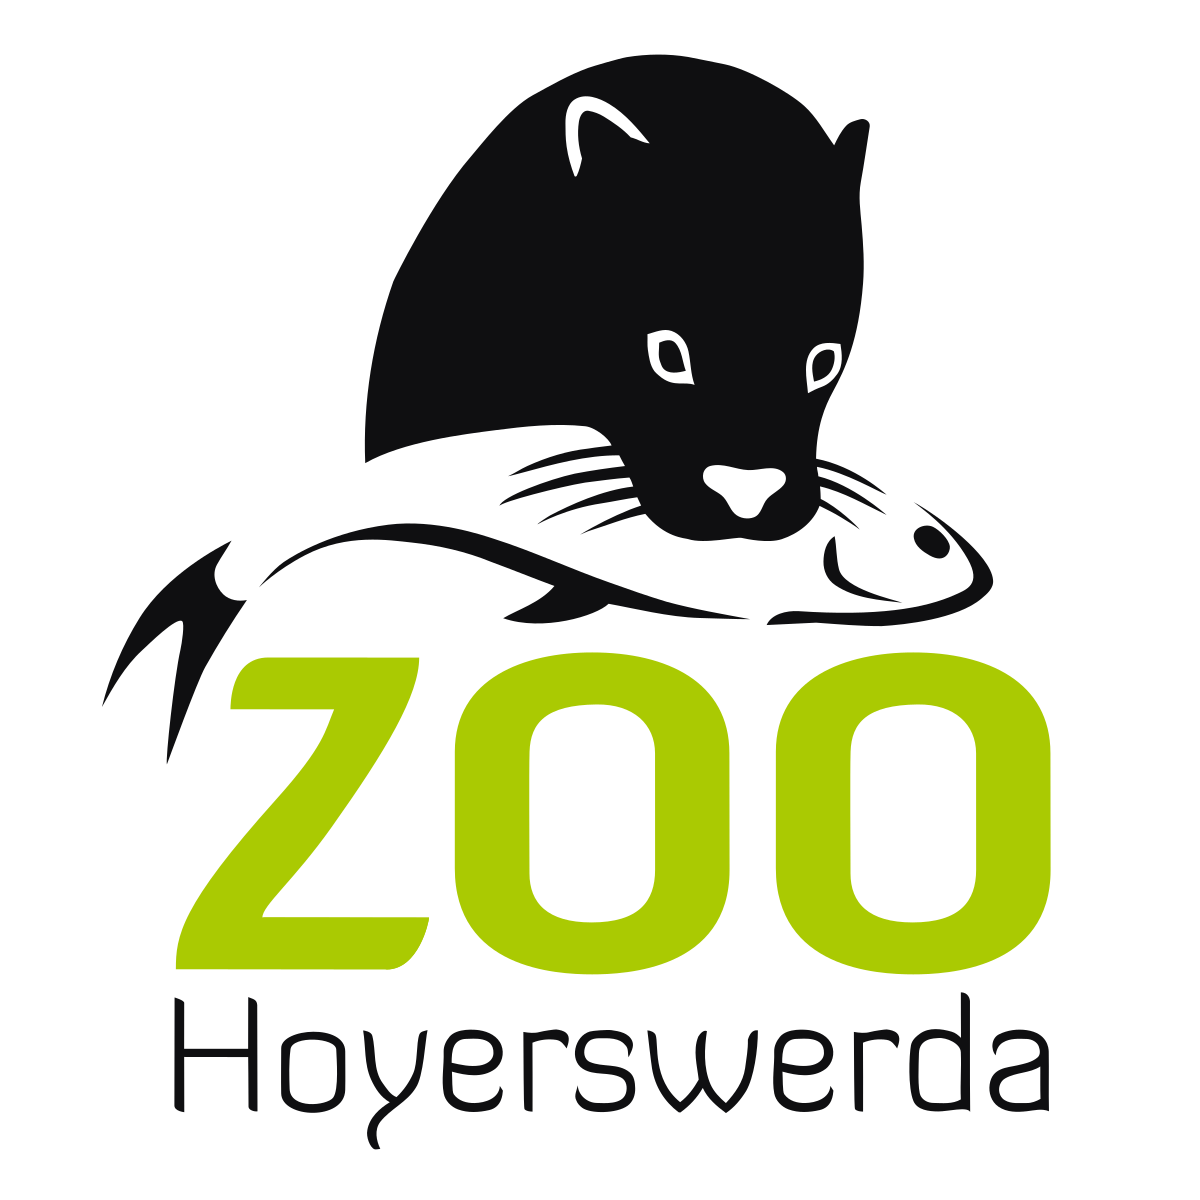 Zoologischer Garten Hoyerswerda Logo